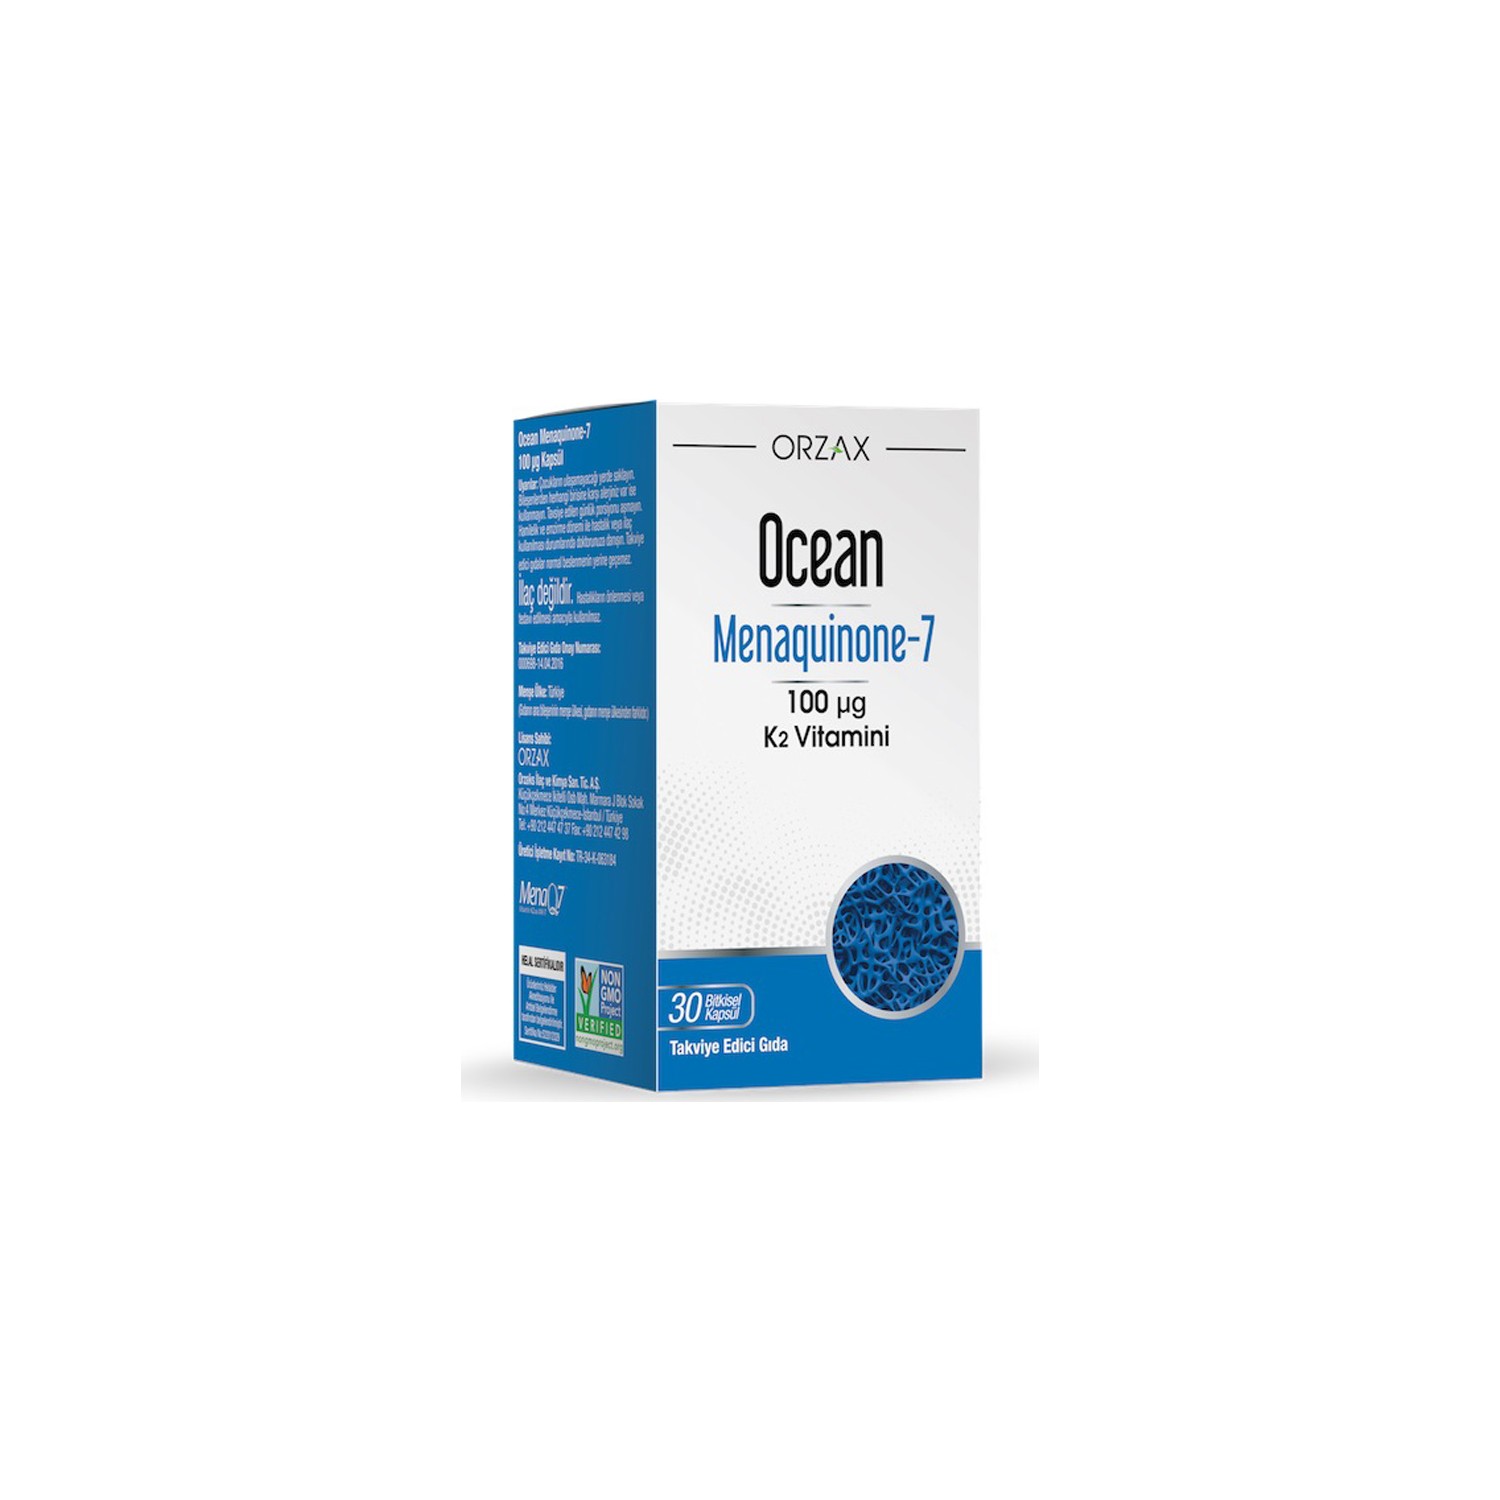 Пищевая добавка Orzax Ocean Mk-7 Vitamin К2 100 мкг, 30 капсул биологически активная добавка solgar naturaliy sourced vitamin k2 mk 7 from natto extract 100 mcg 50 мл